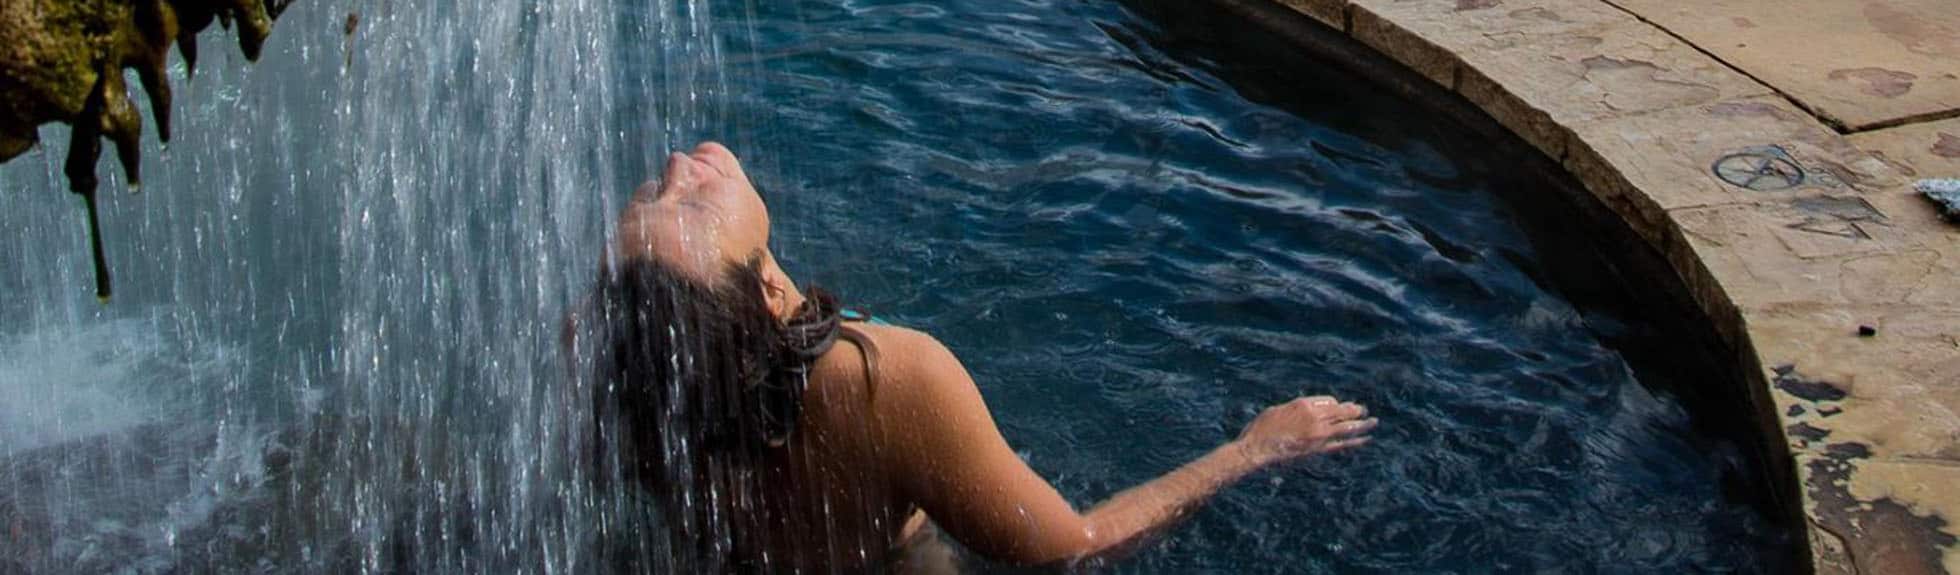 Woman enjoyig hot springs at colorado women's nature retreat